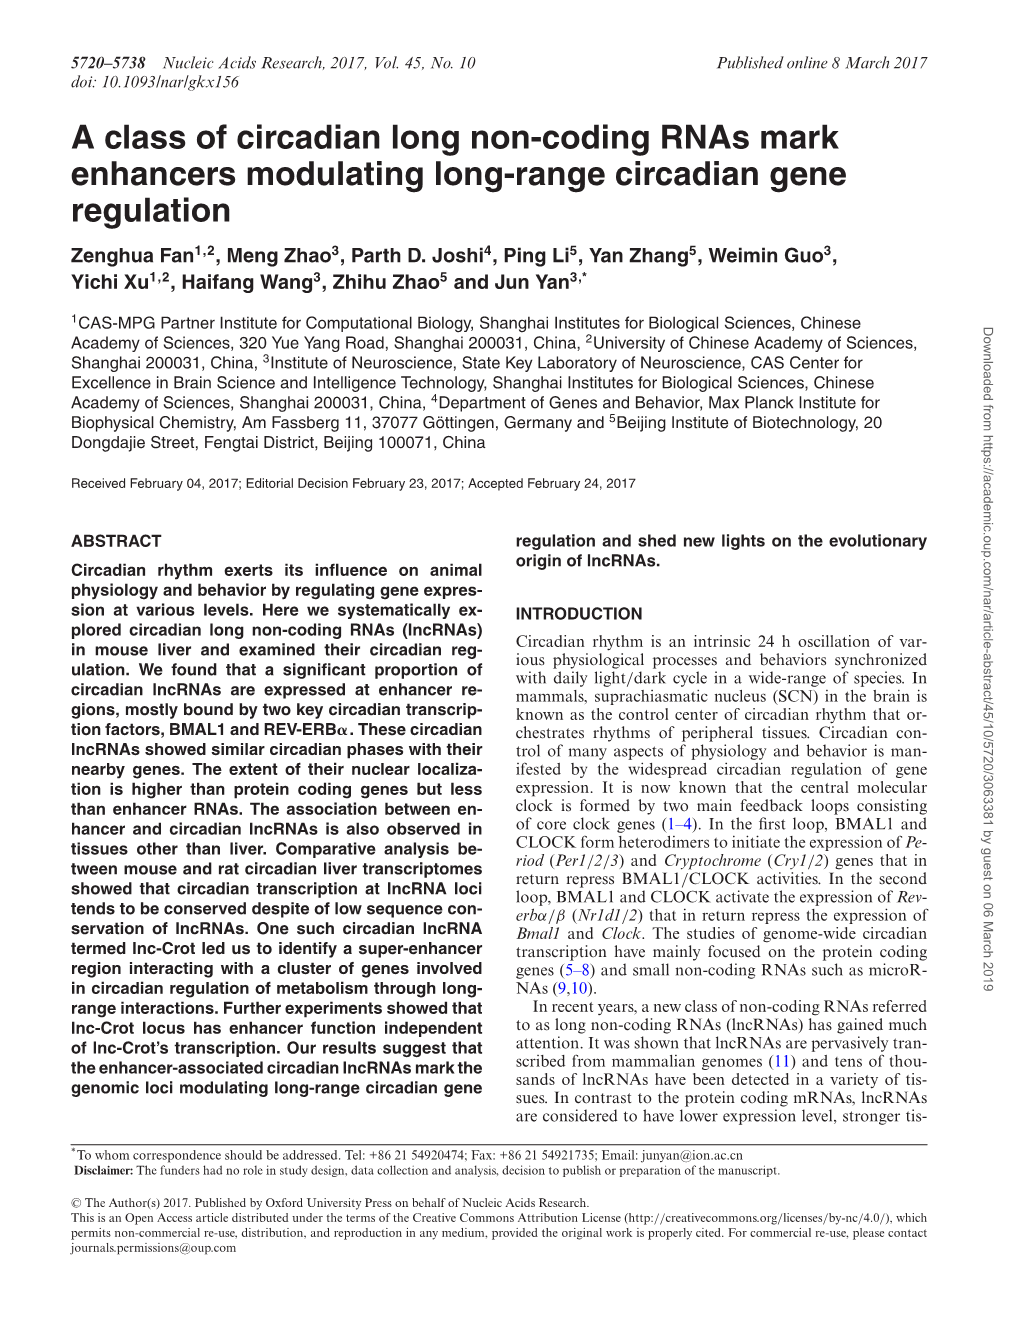 A Class of Circadian Long Non-Coding Rnas Mark Enhancers Modulating Long-Range Circadian Gene Regulation Zenghua Fan1,2, Meng Zhao3, Parth D